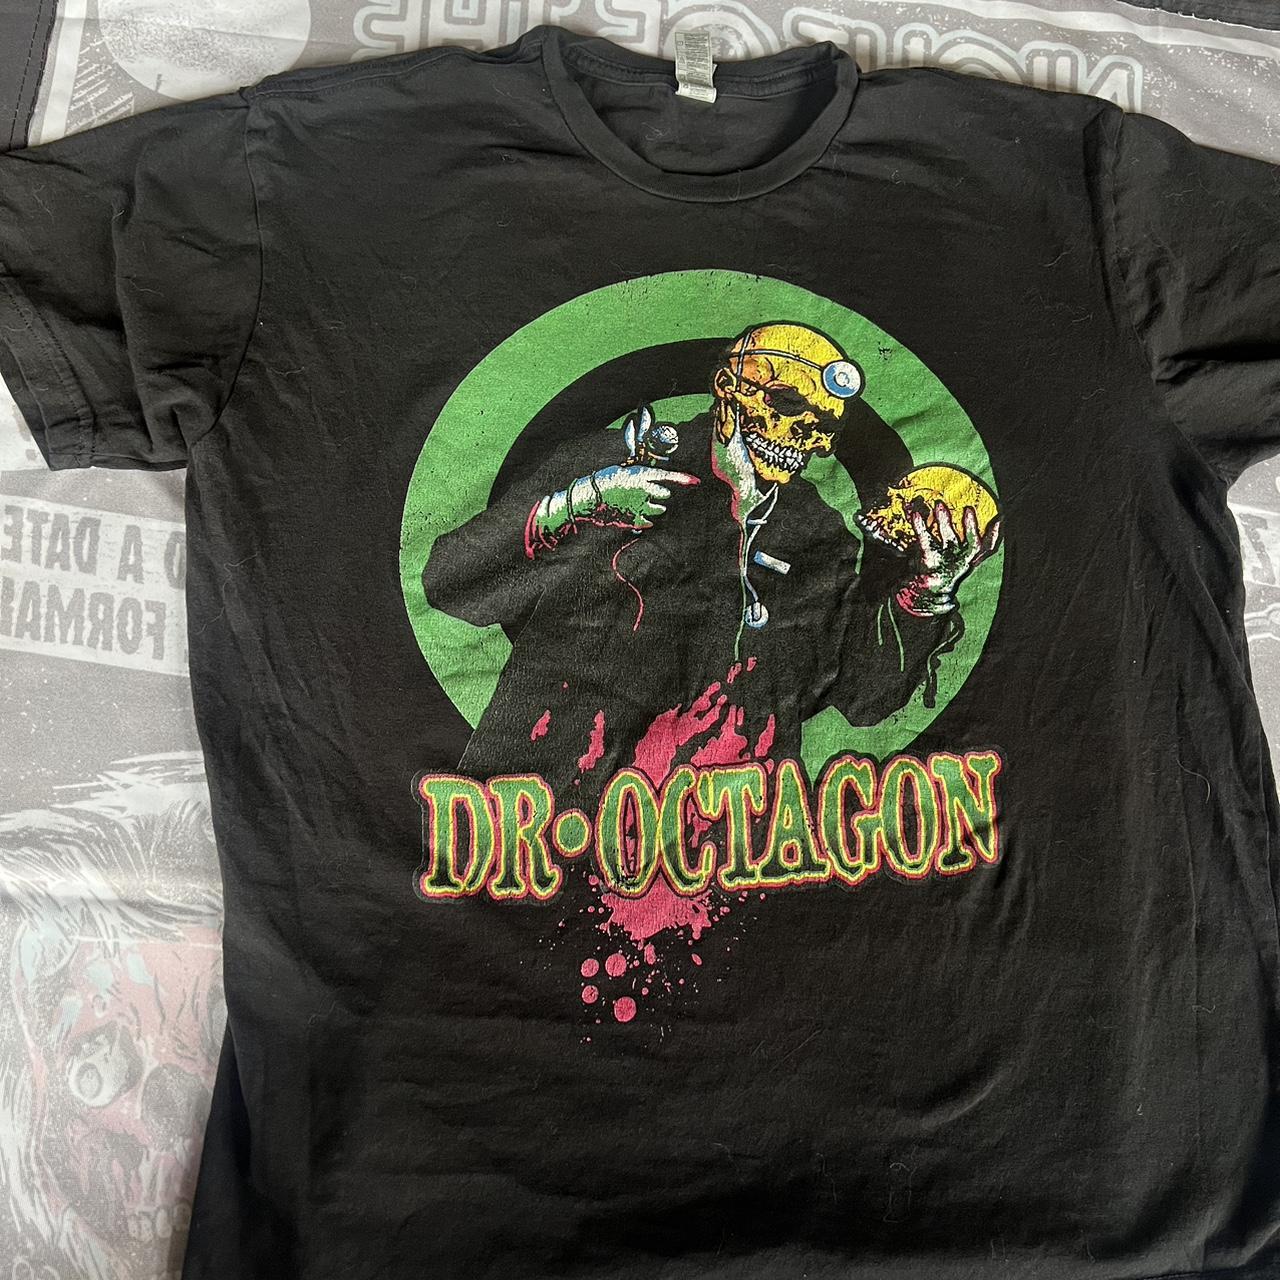 Dr. Octagon aka Kool Keith shirt. Clean and hardly... - Depop